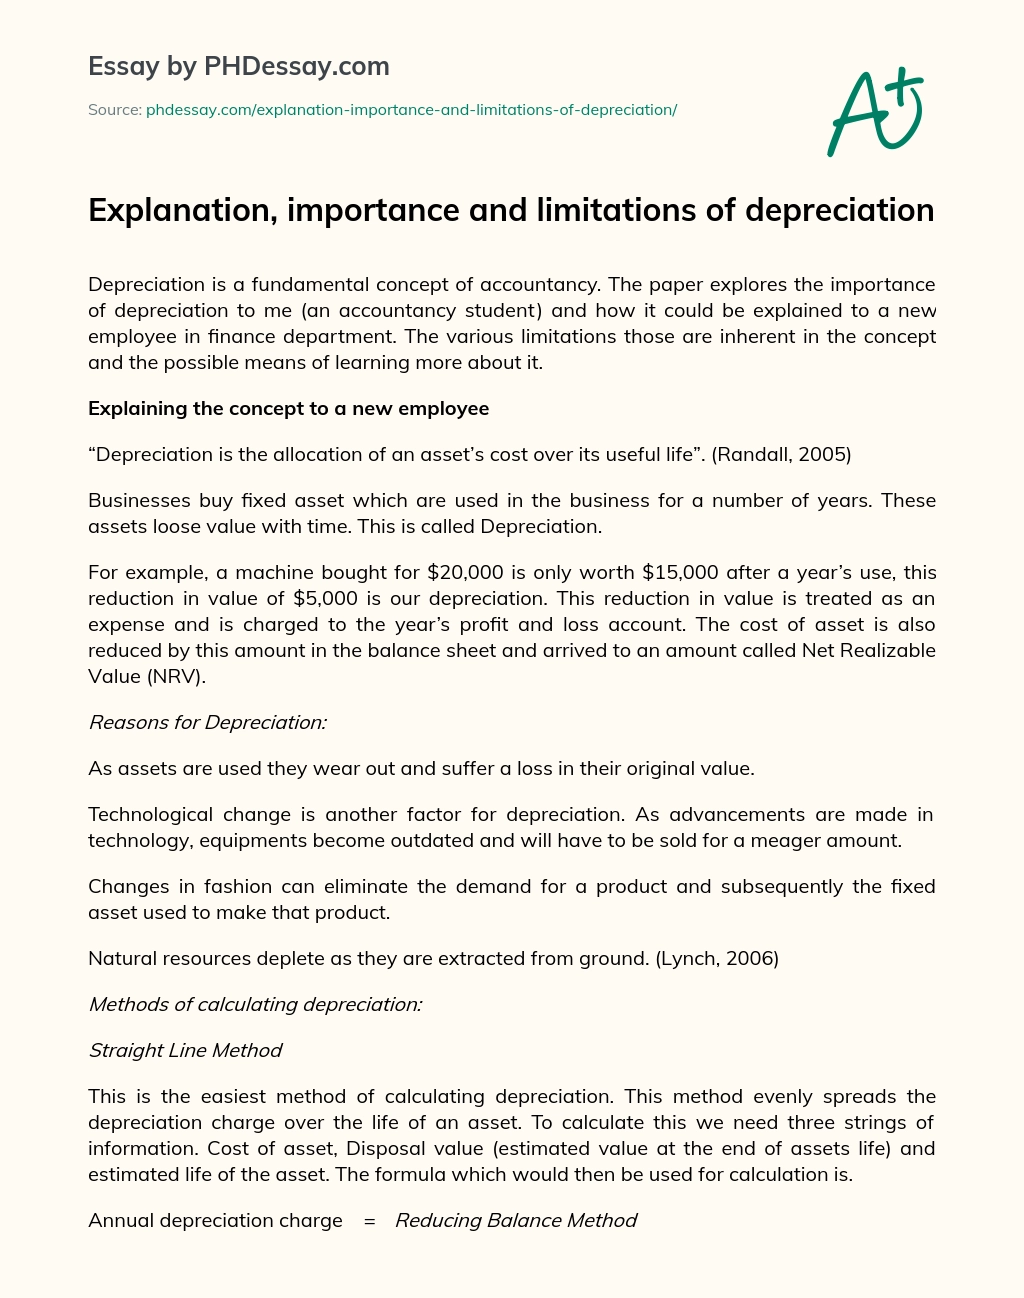 Explanation, importance and limitations of depreciation essay